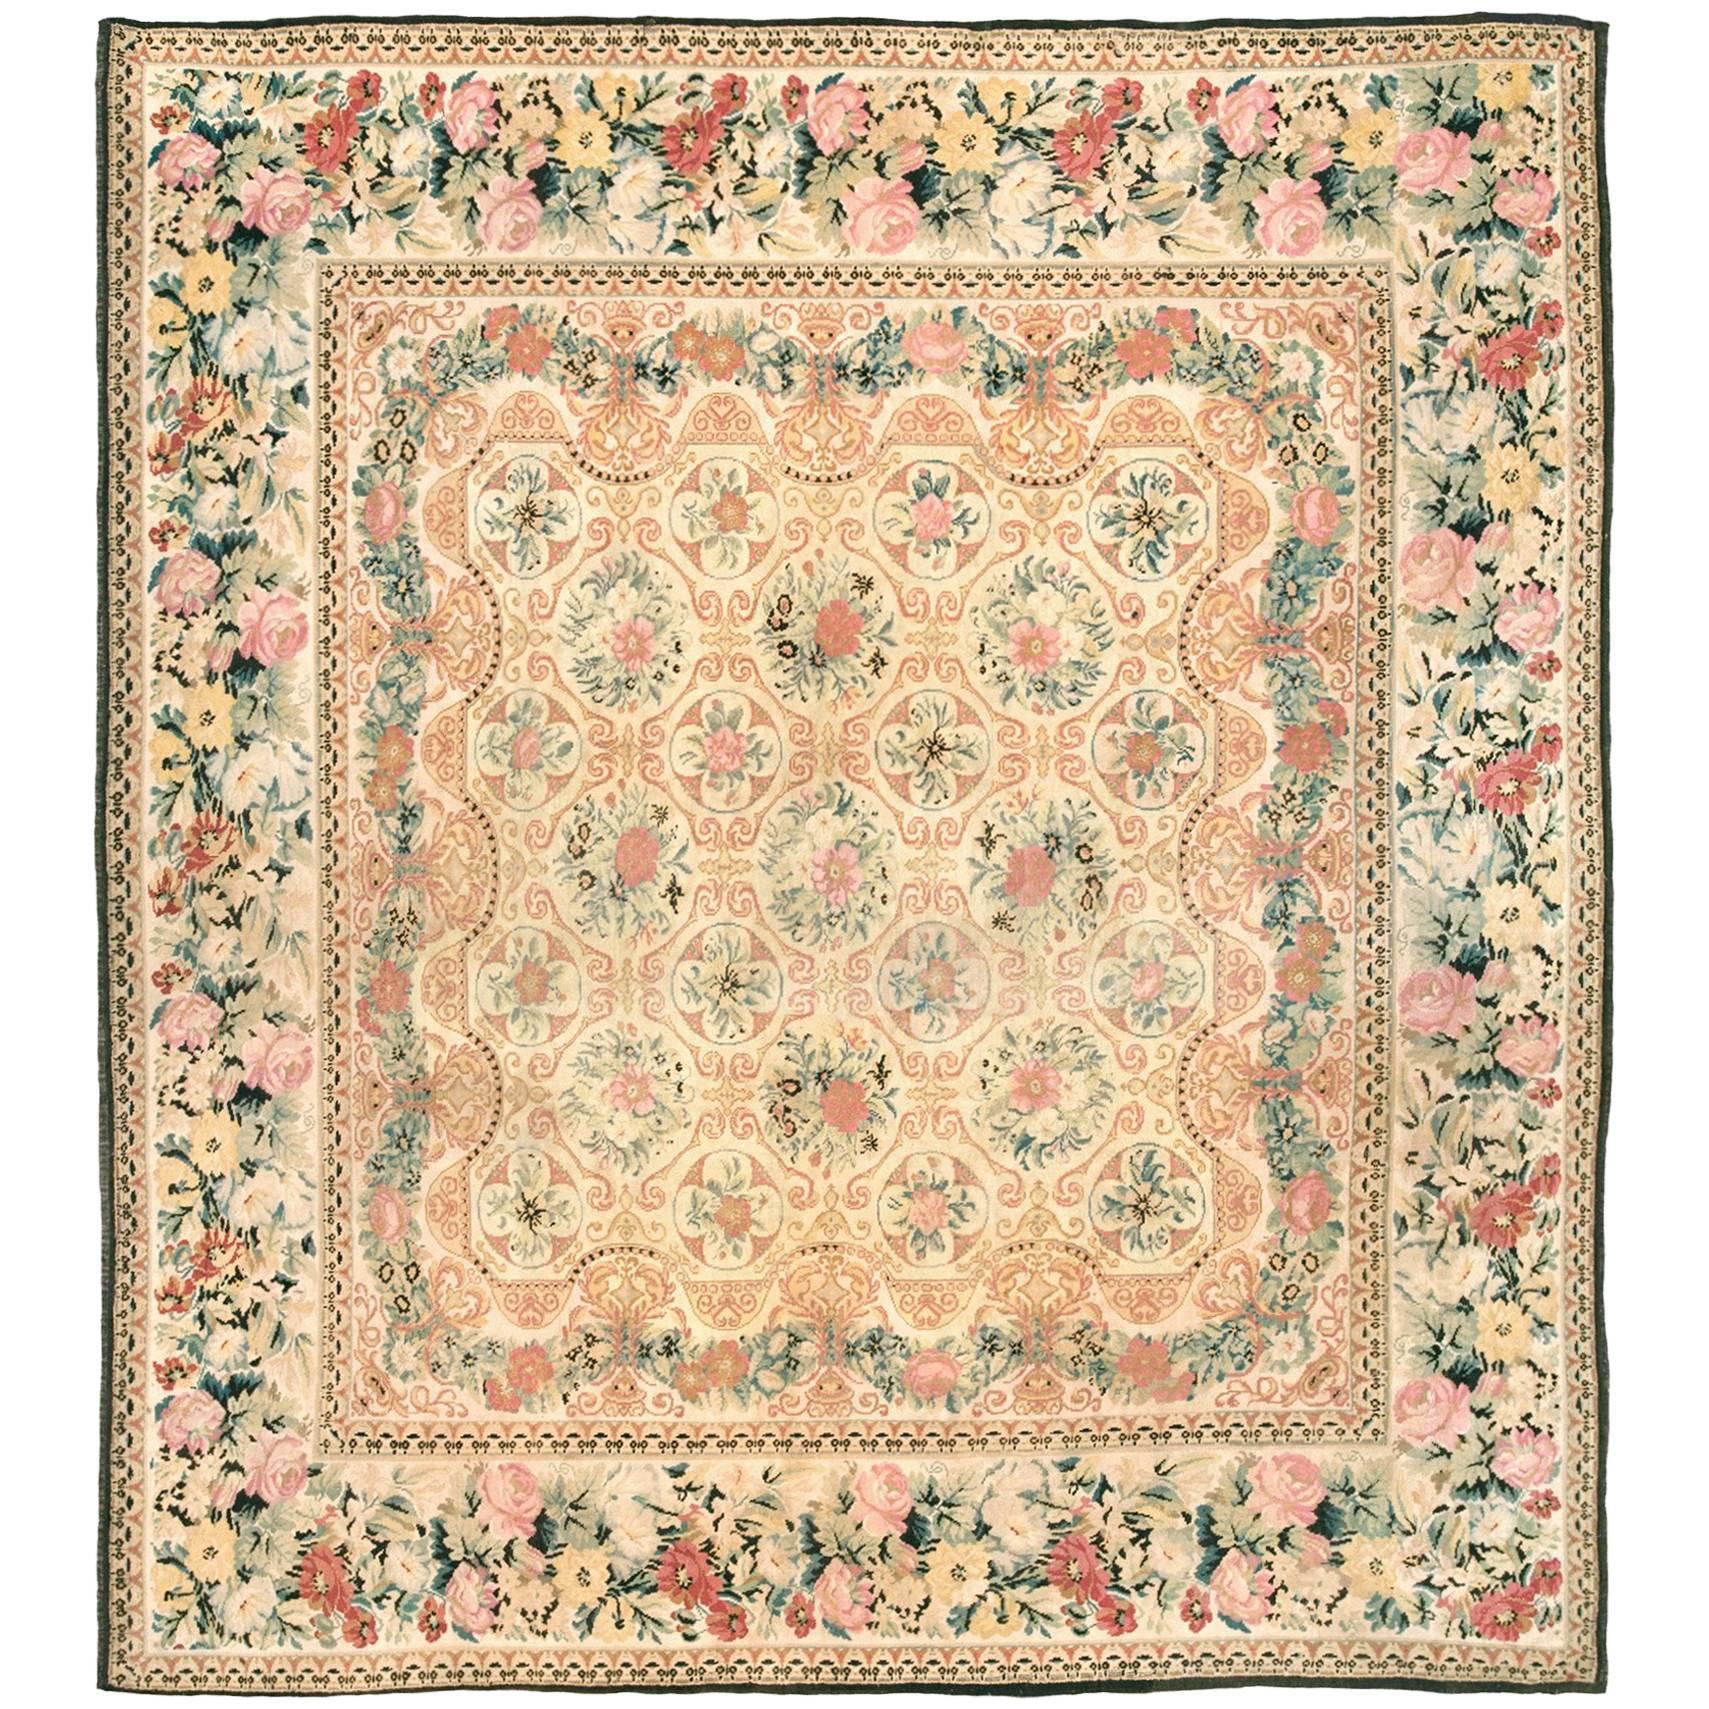 Ukranian Pile Carpet with Floral Design, 19th Century